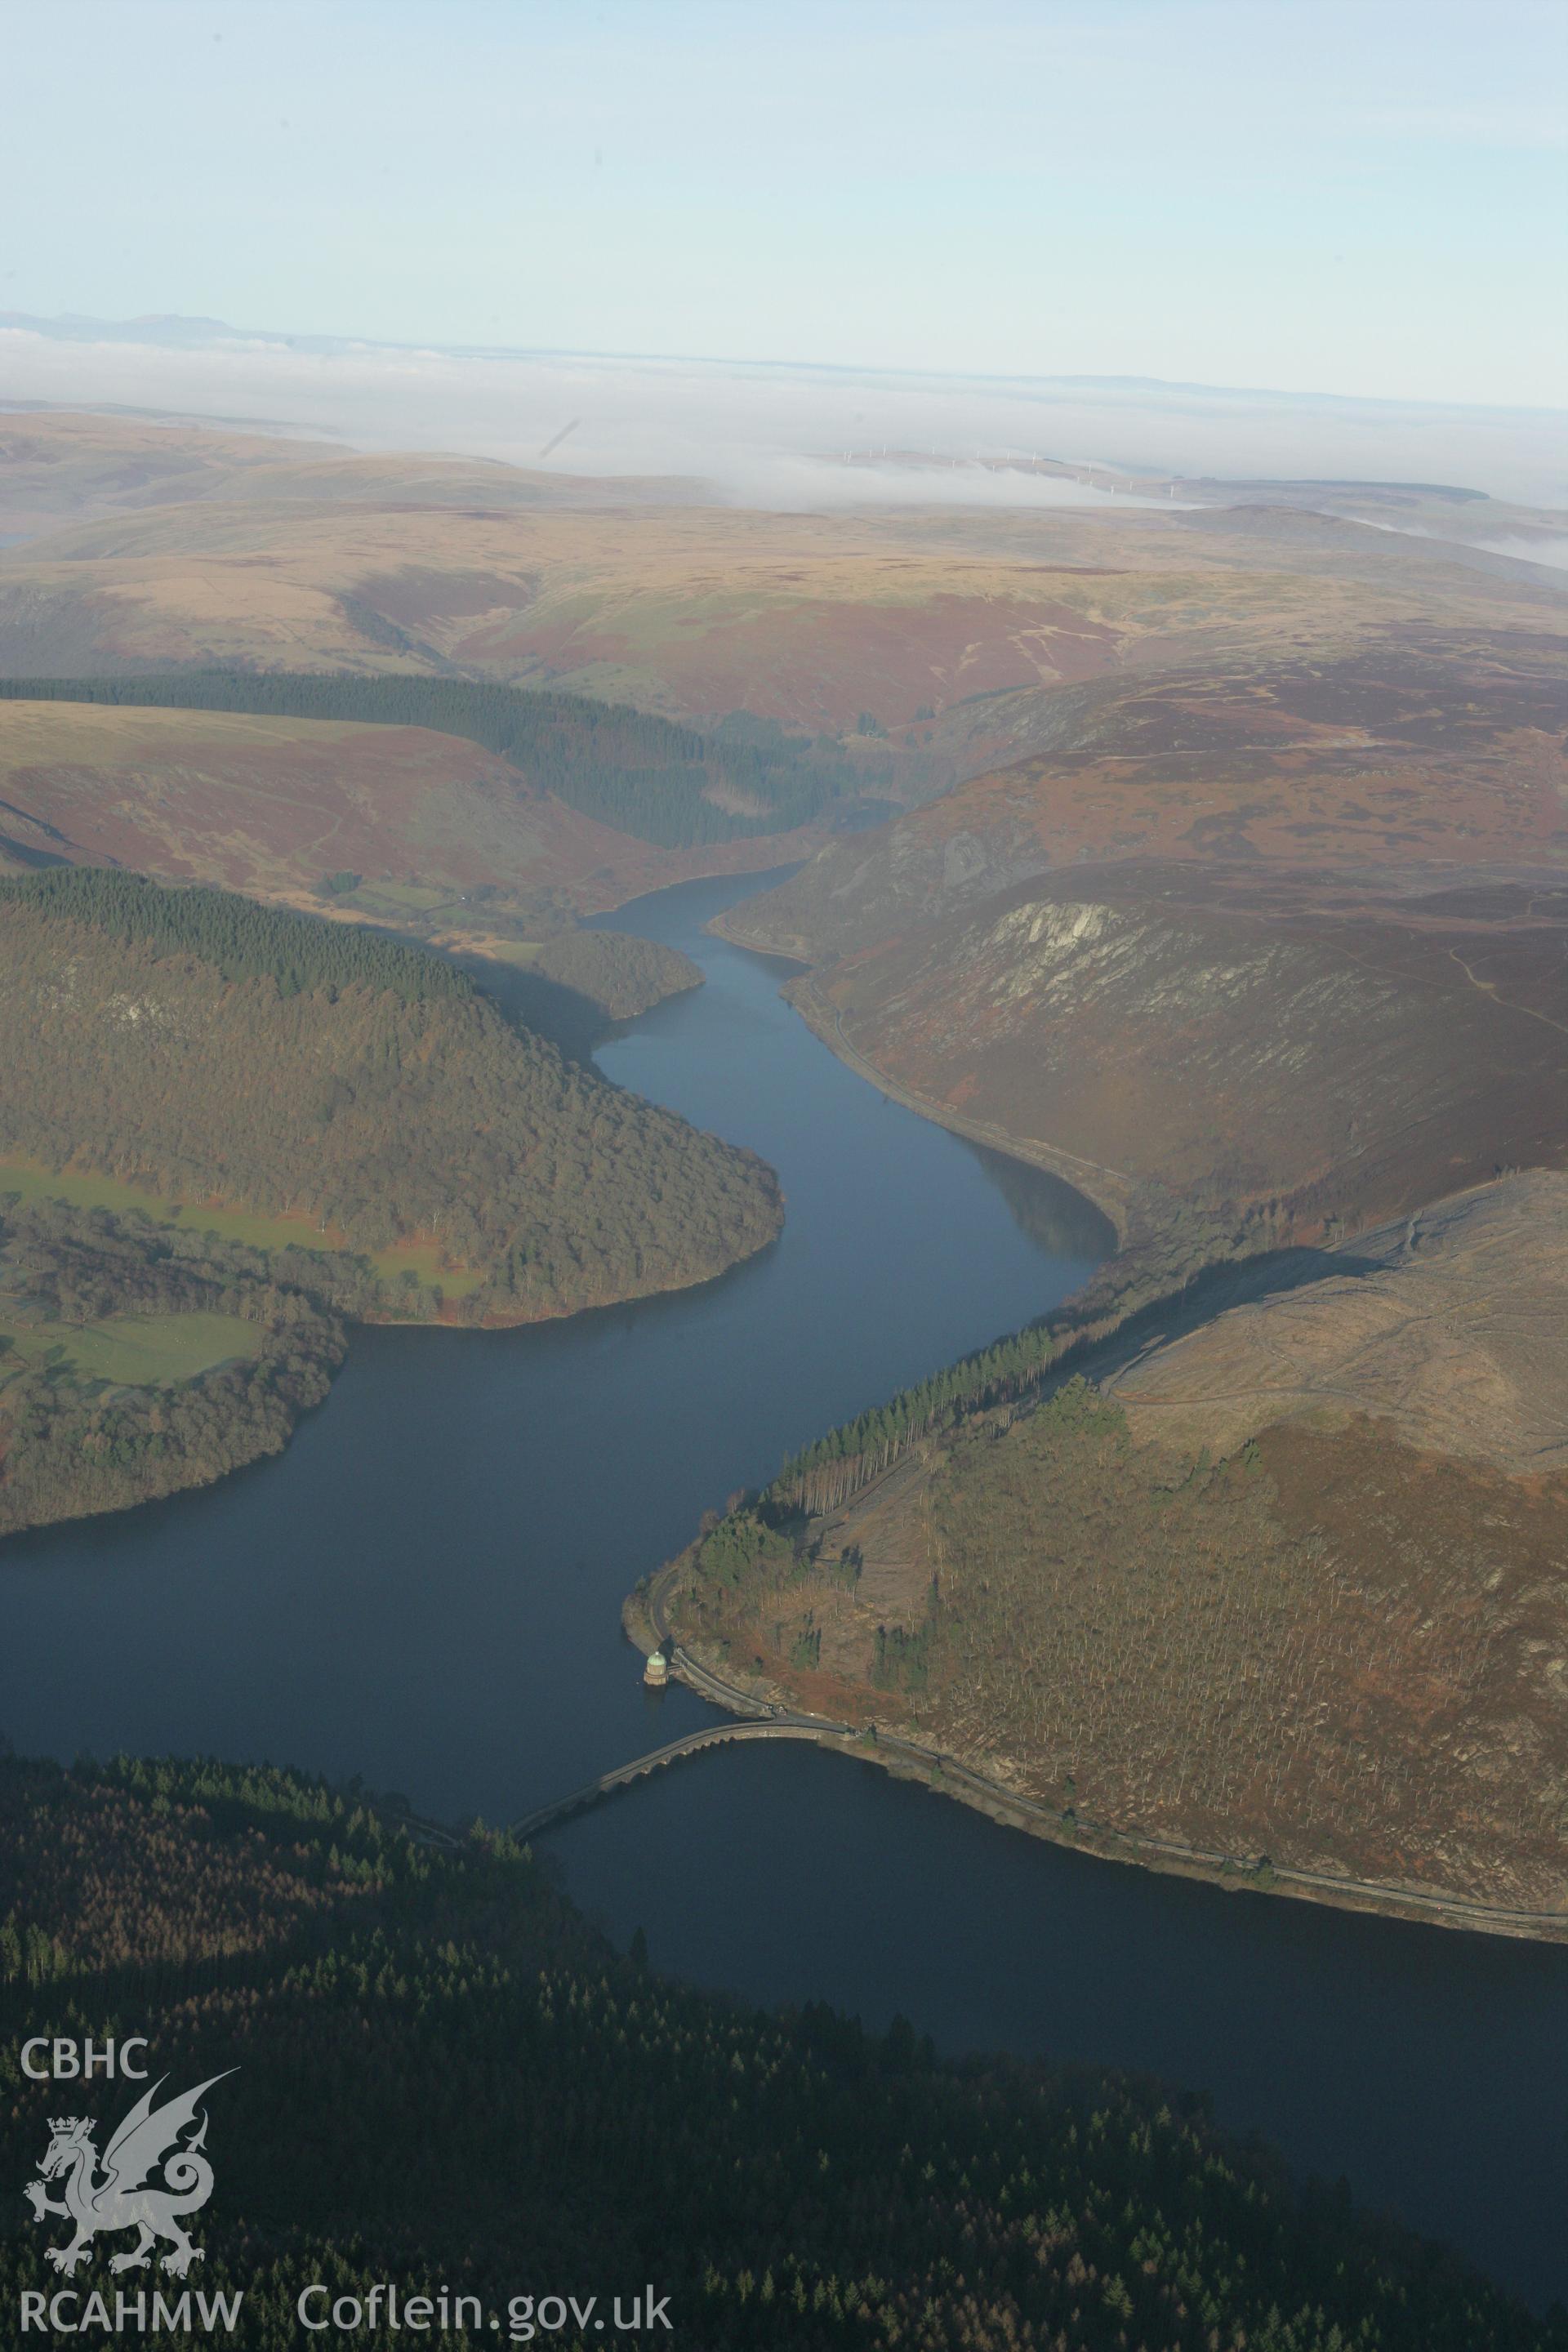 RCAHMW colour oblique photograph of Garreg-Ddu reservoir. Taken by Toby Driver on 20/12/2007.